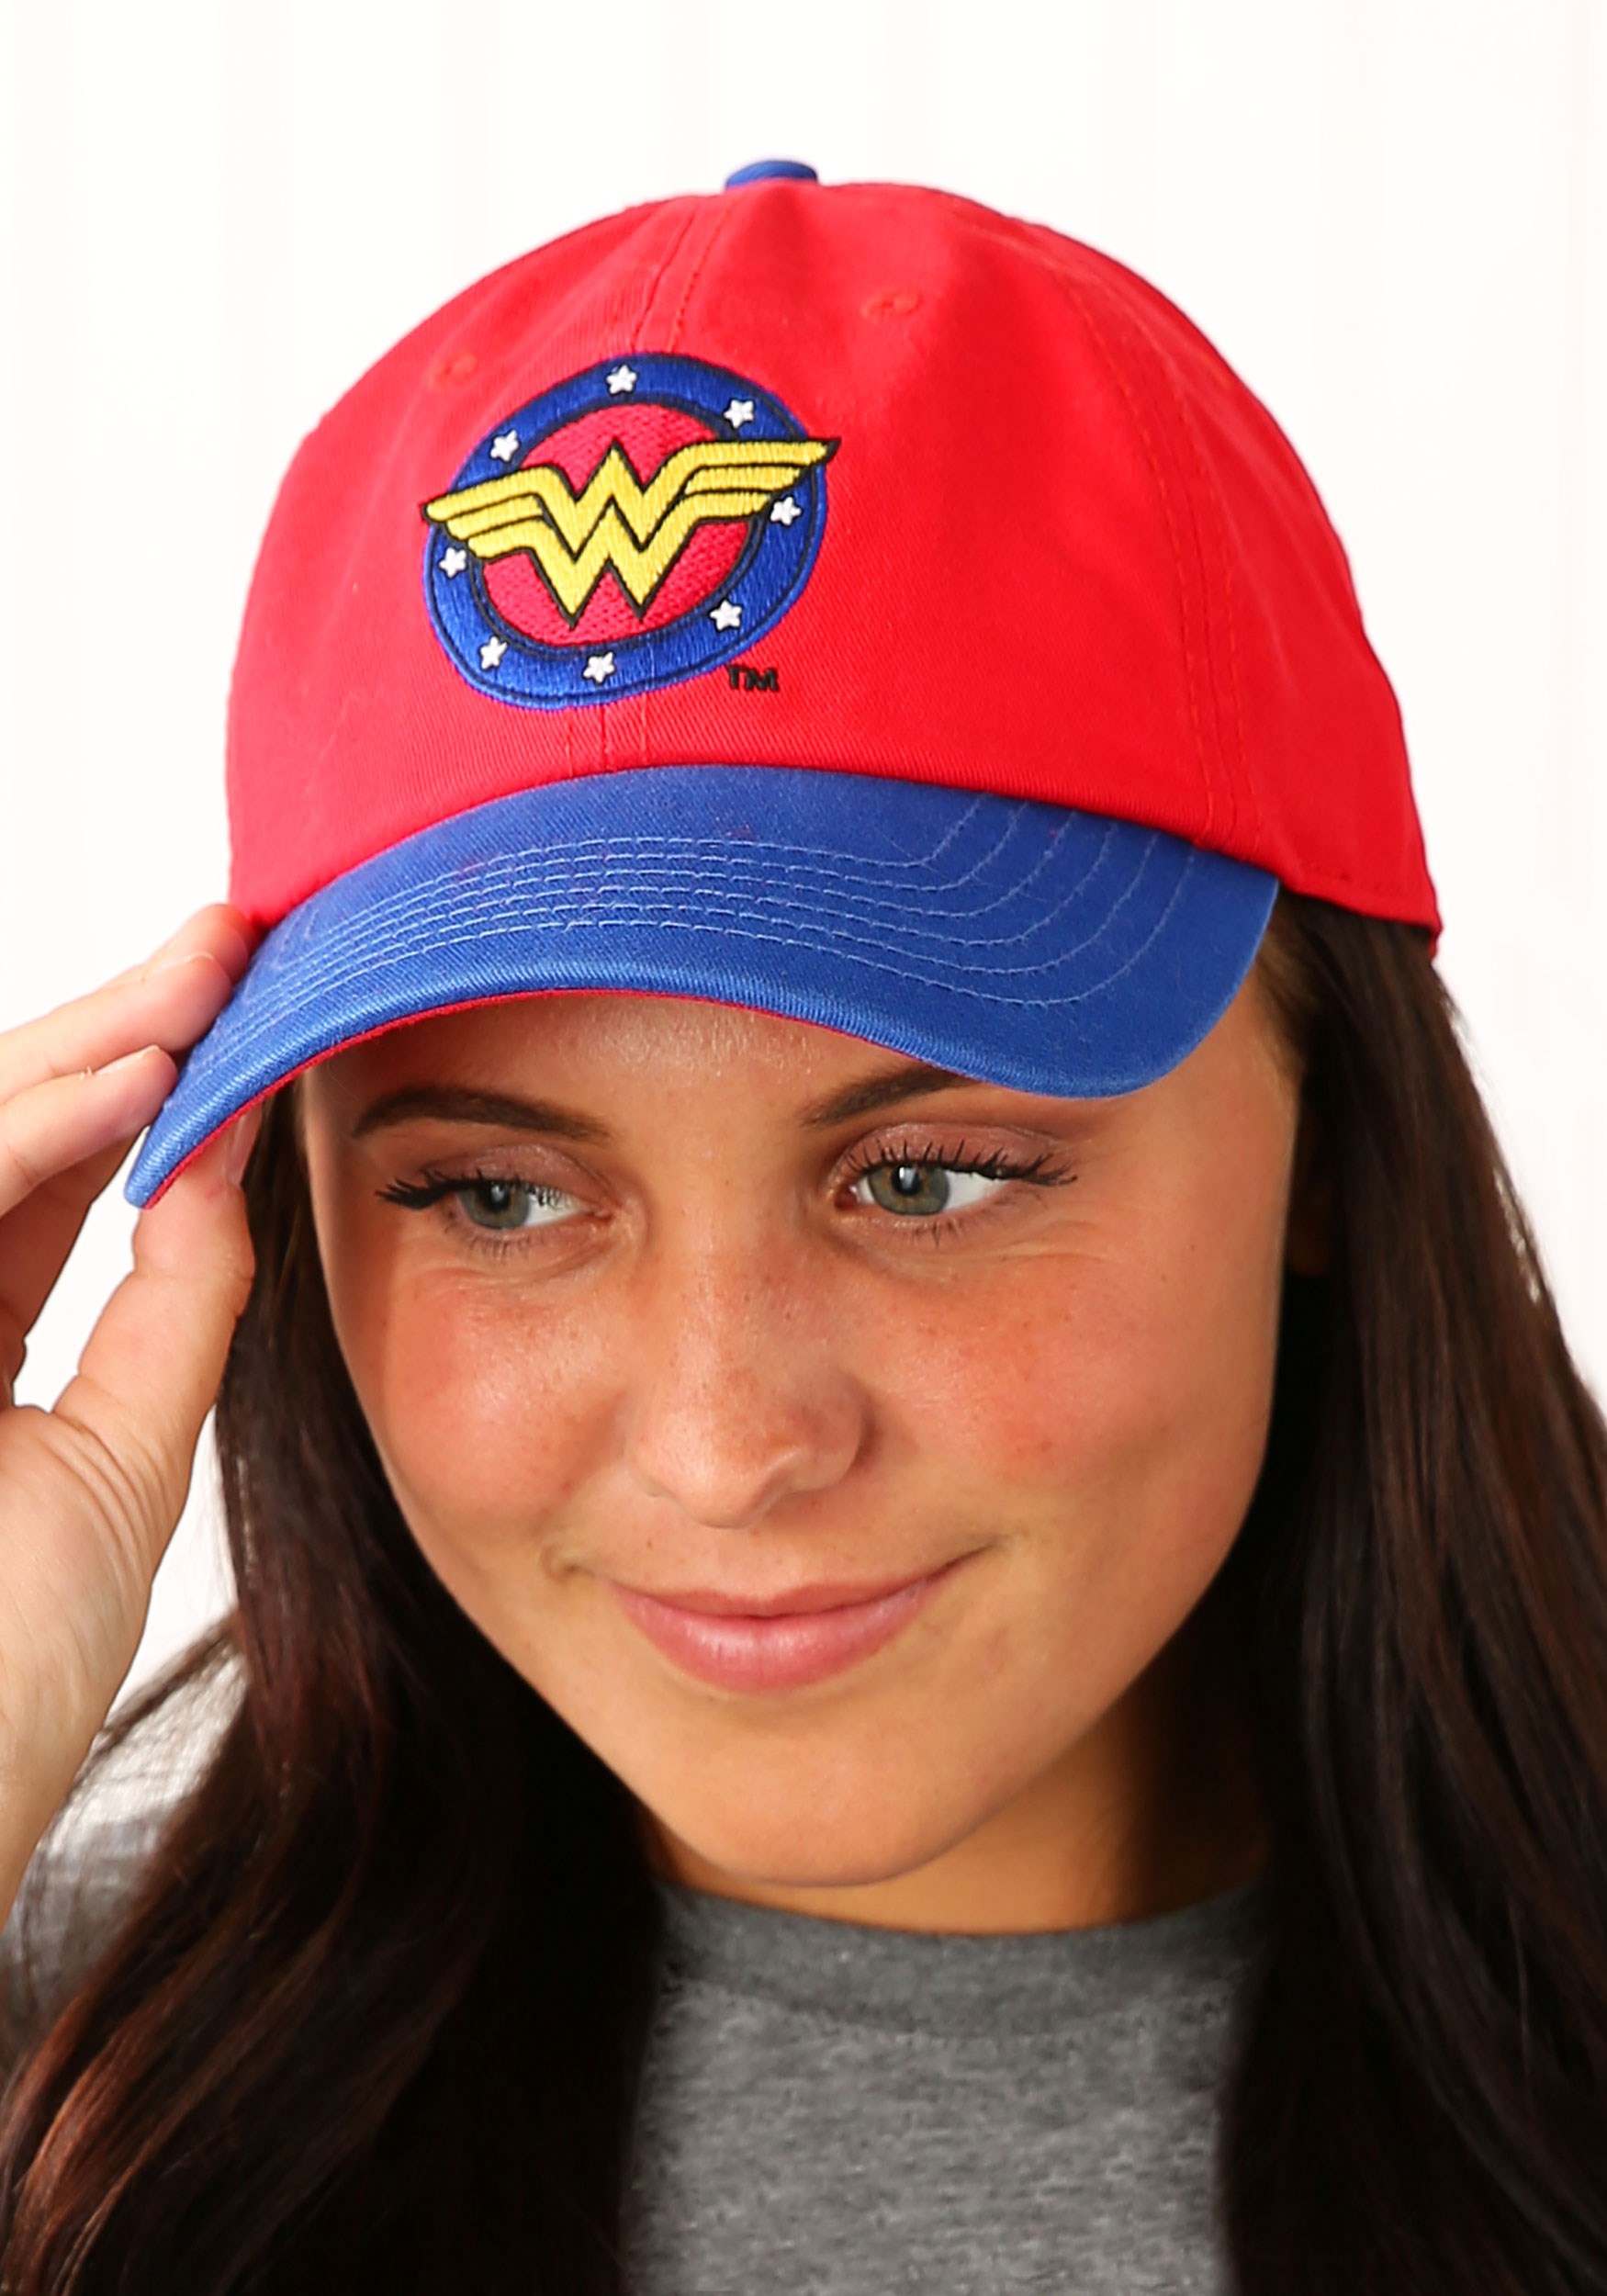 DC COMICS WONDER WOMAN SYMBOL COSTUME STYLED RED SNAPBACK CAP